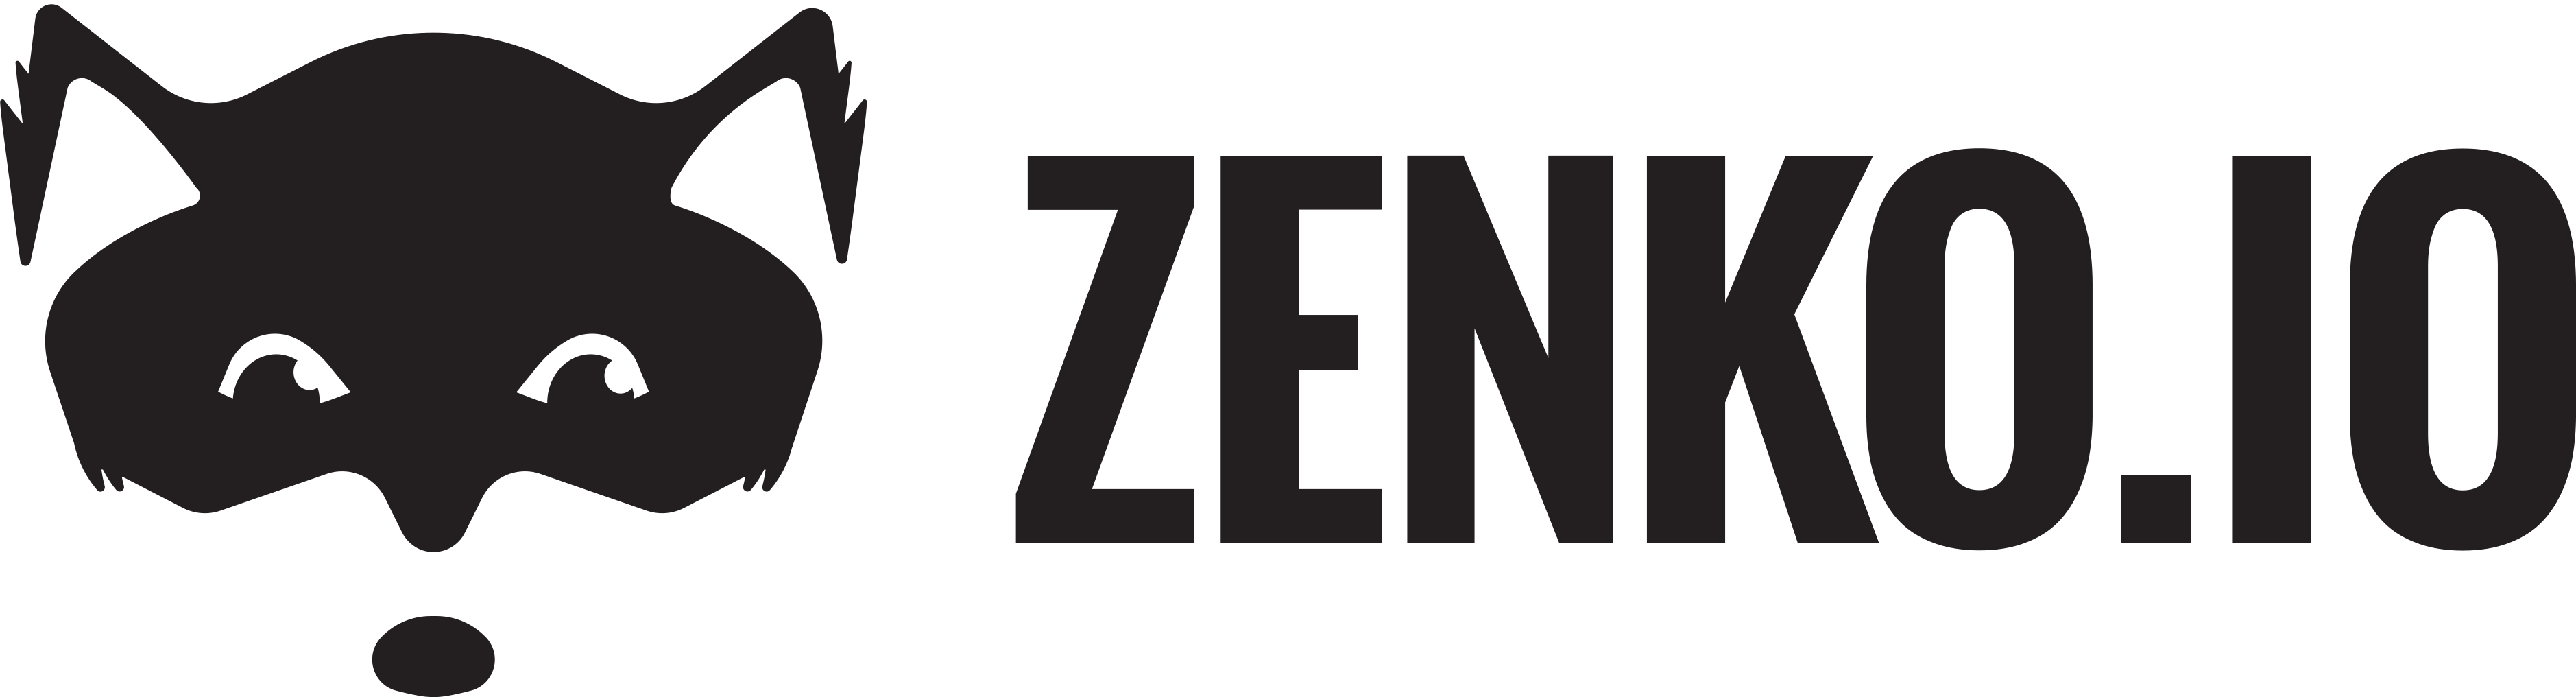 zenko.io-logo-wide-bw.png